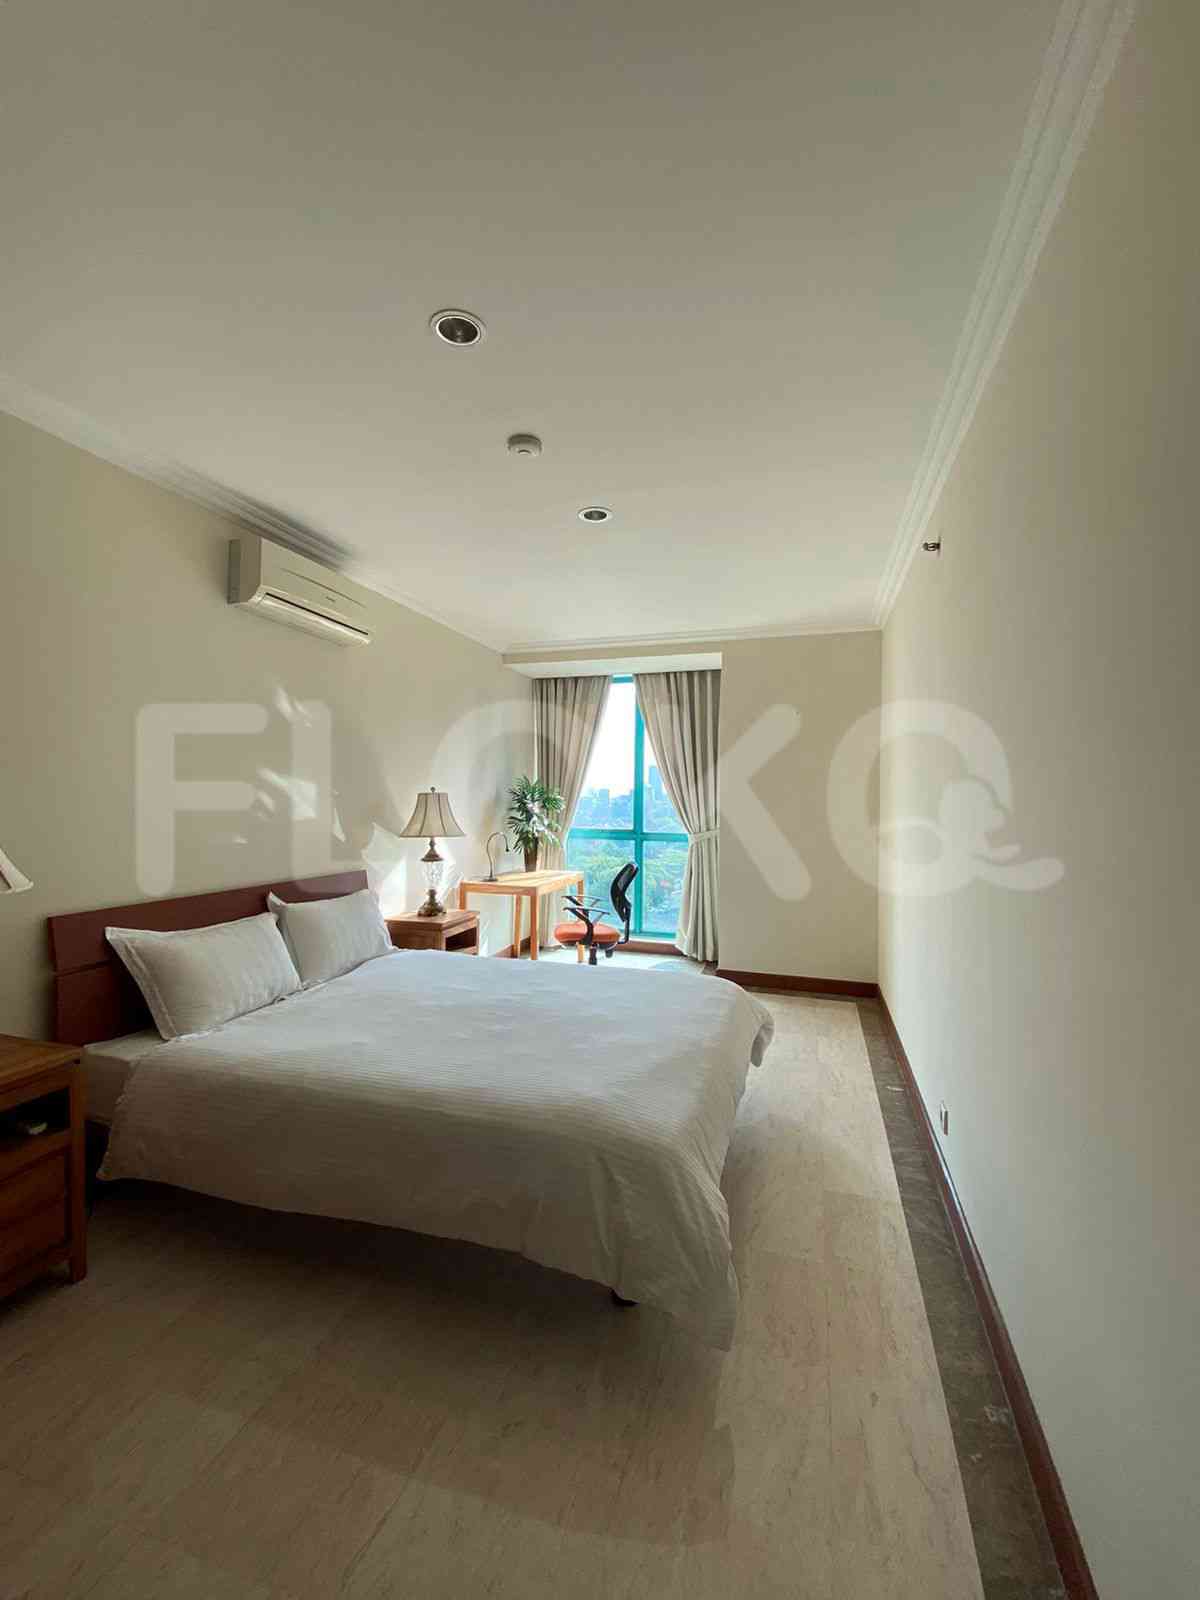 3 Bedroom on 10th Floor for Rent in Casablanca Apartment - fte130 2